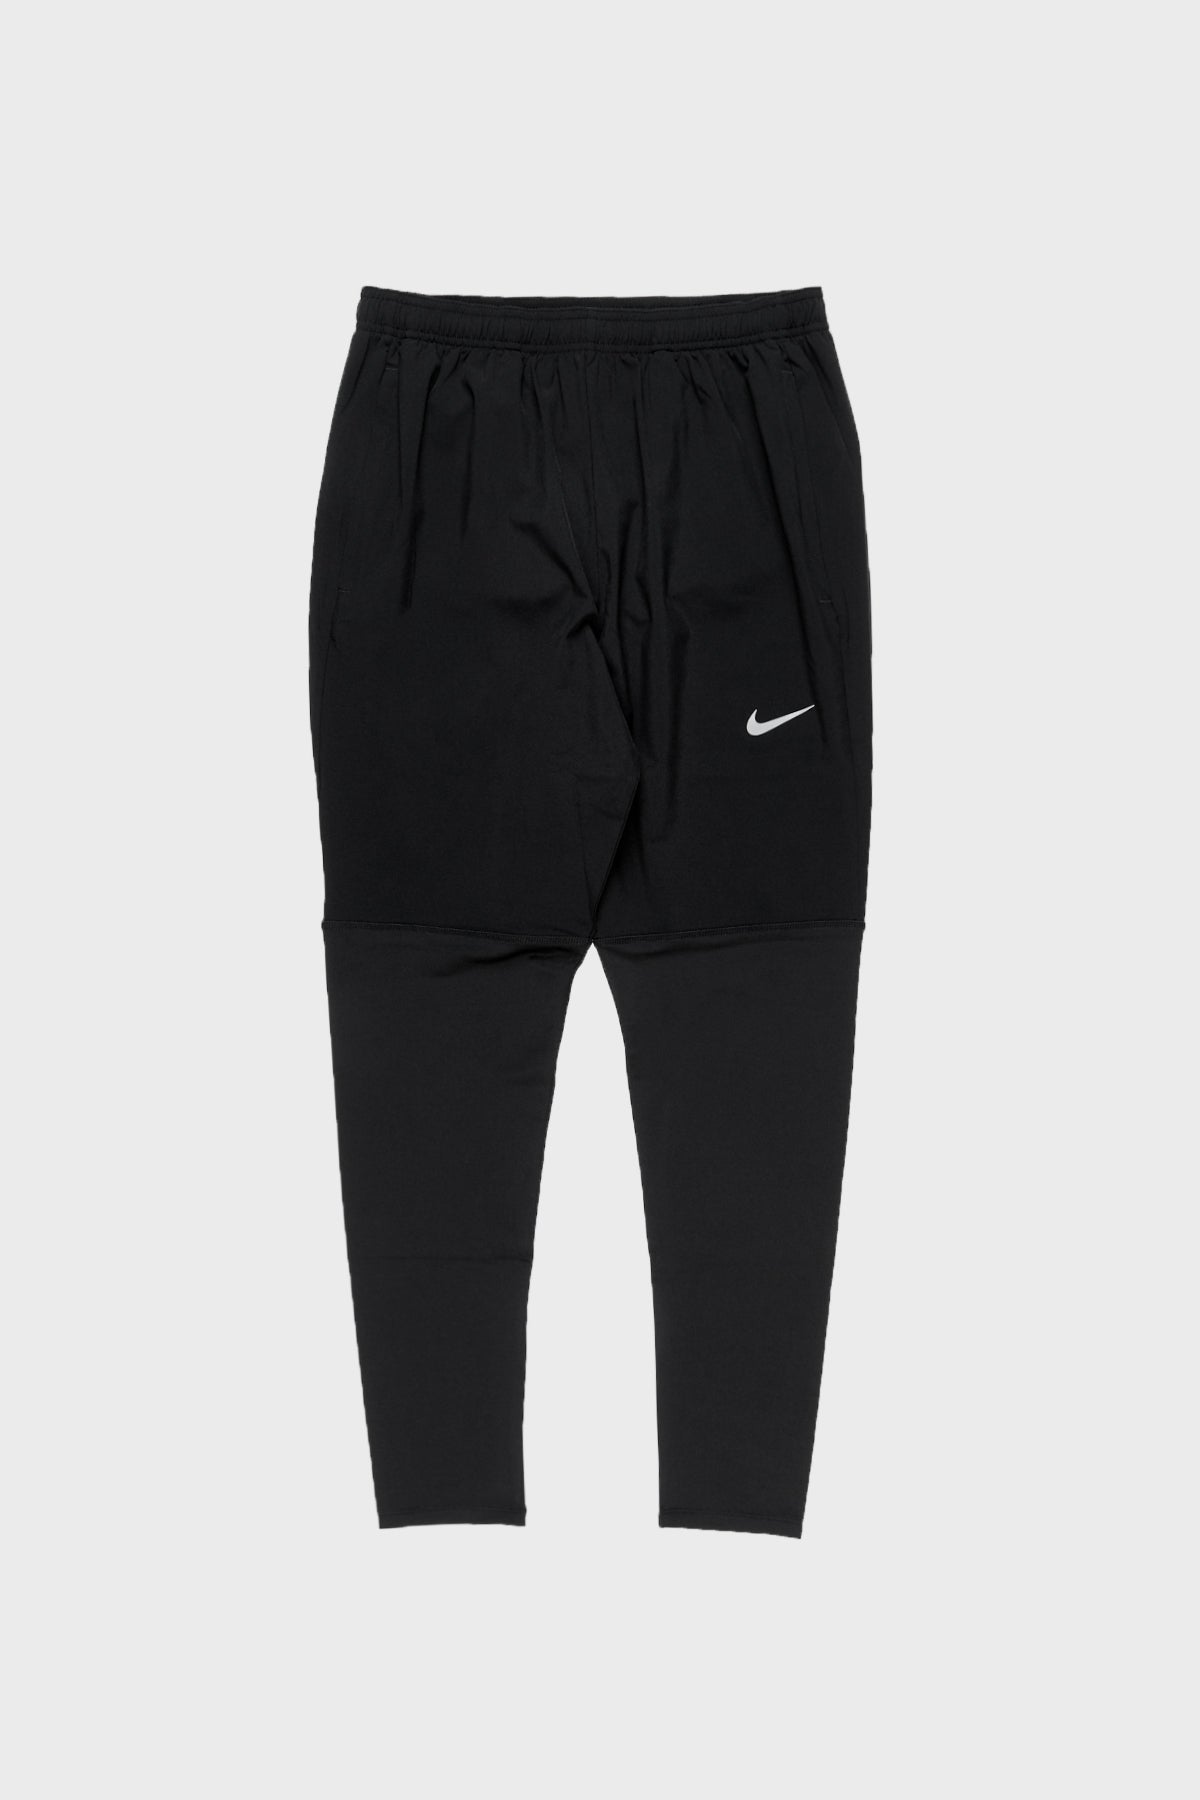 Nike - Dri-FIT UV Challenger Pants